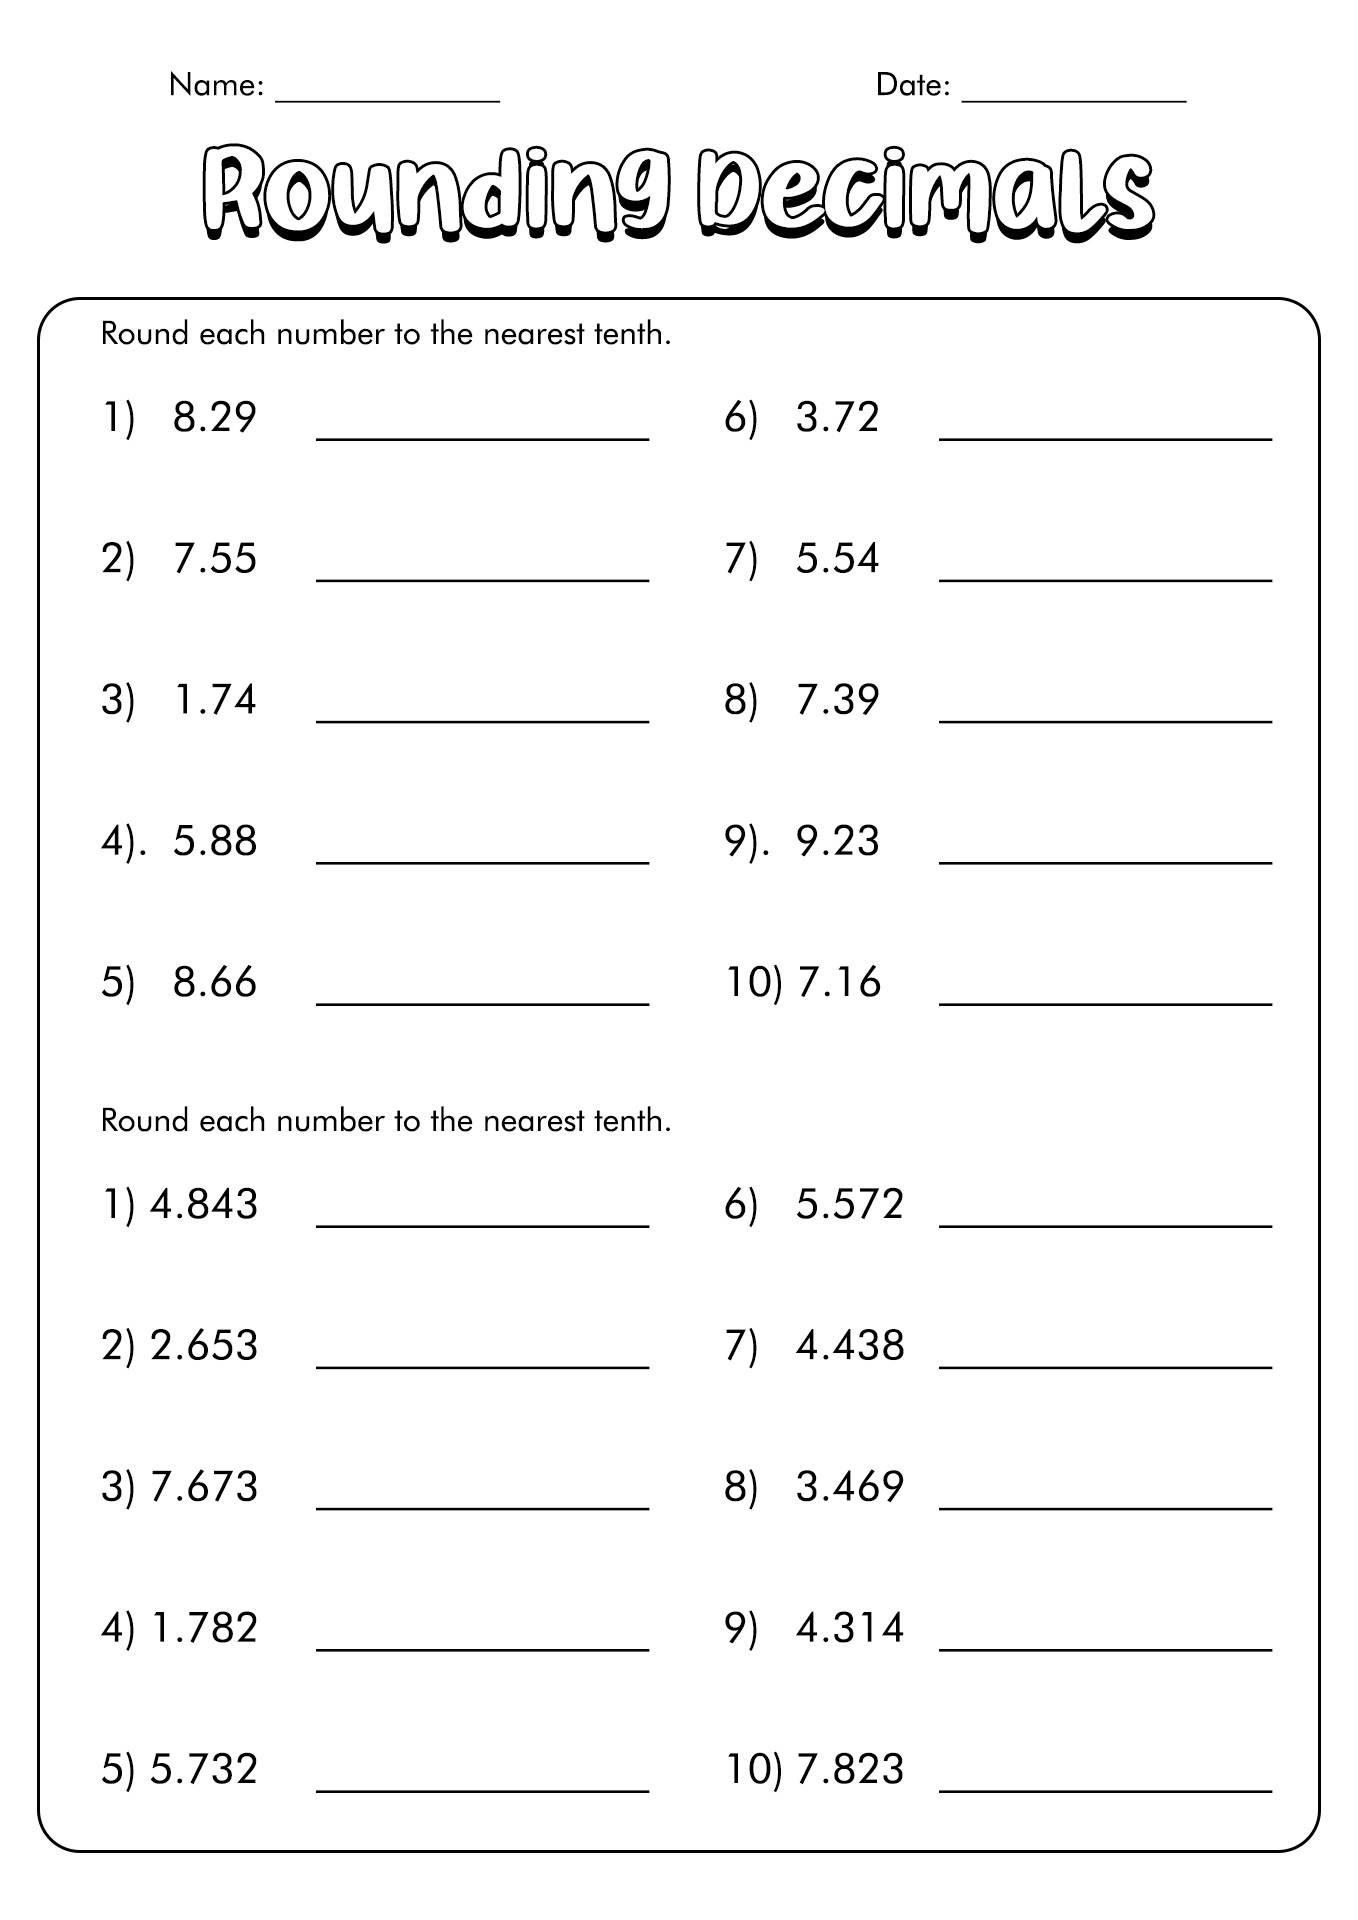 rounding-decimals-worksheet-5th-grade